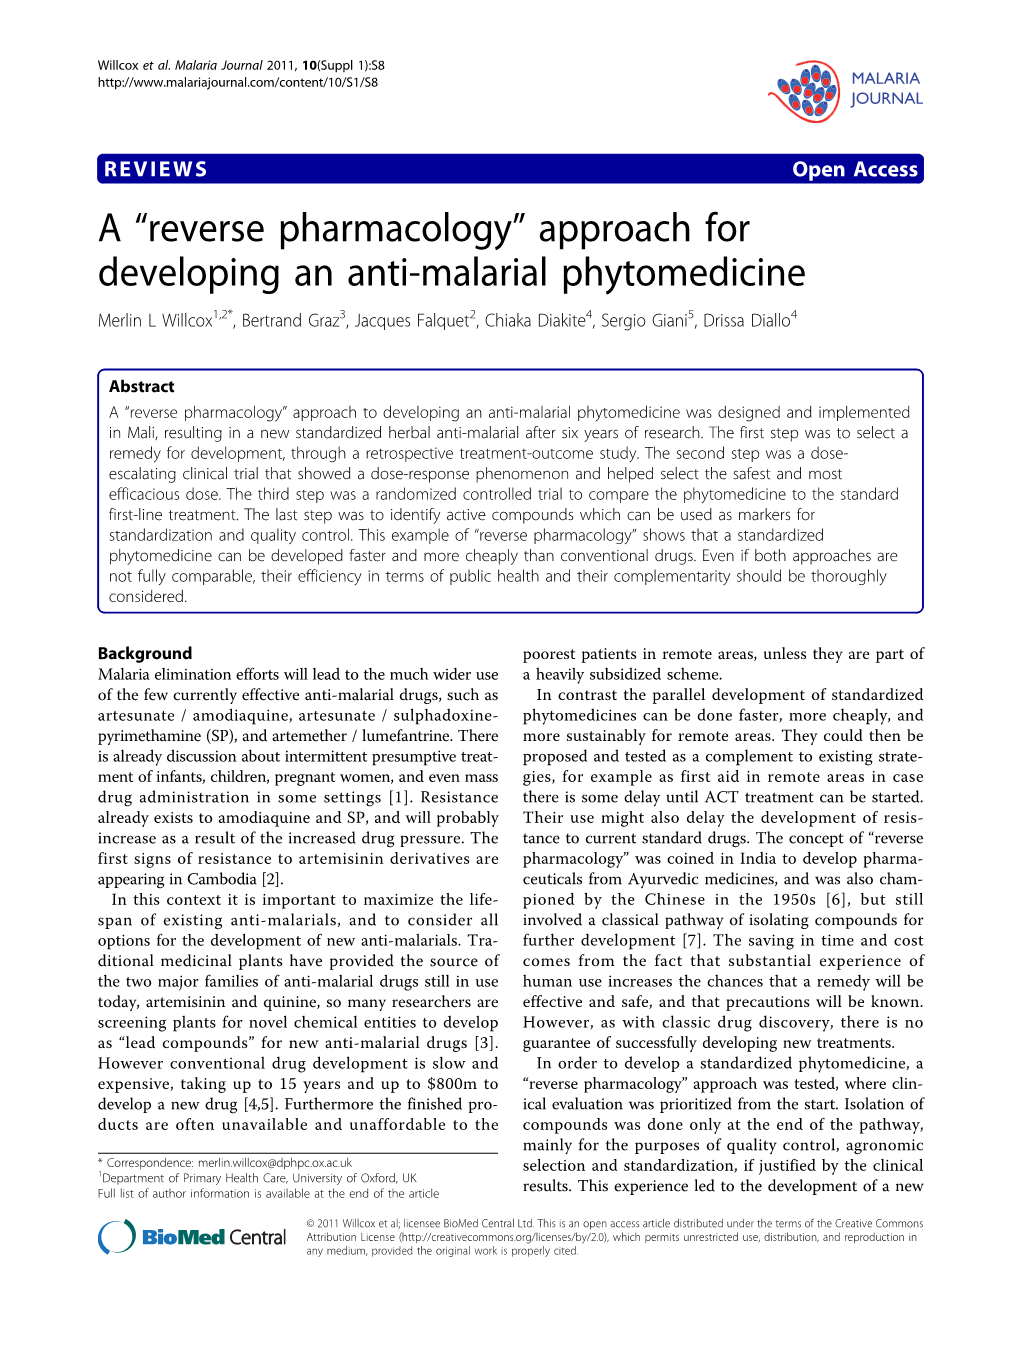 Approach for Developing an Anti-Malarial Phytomedicine Merlin L Willcox1,2*, Bertrand Graz3, Jacques Falquet2, Chiaka Diakite4, Sergio Giani5, Drissa Diallo4